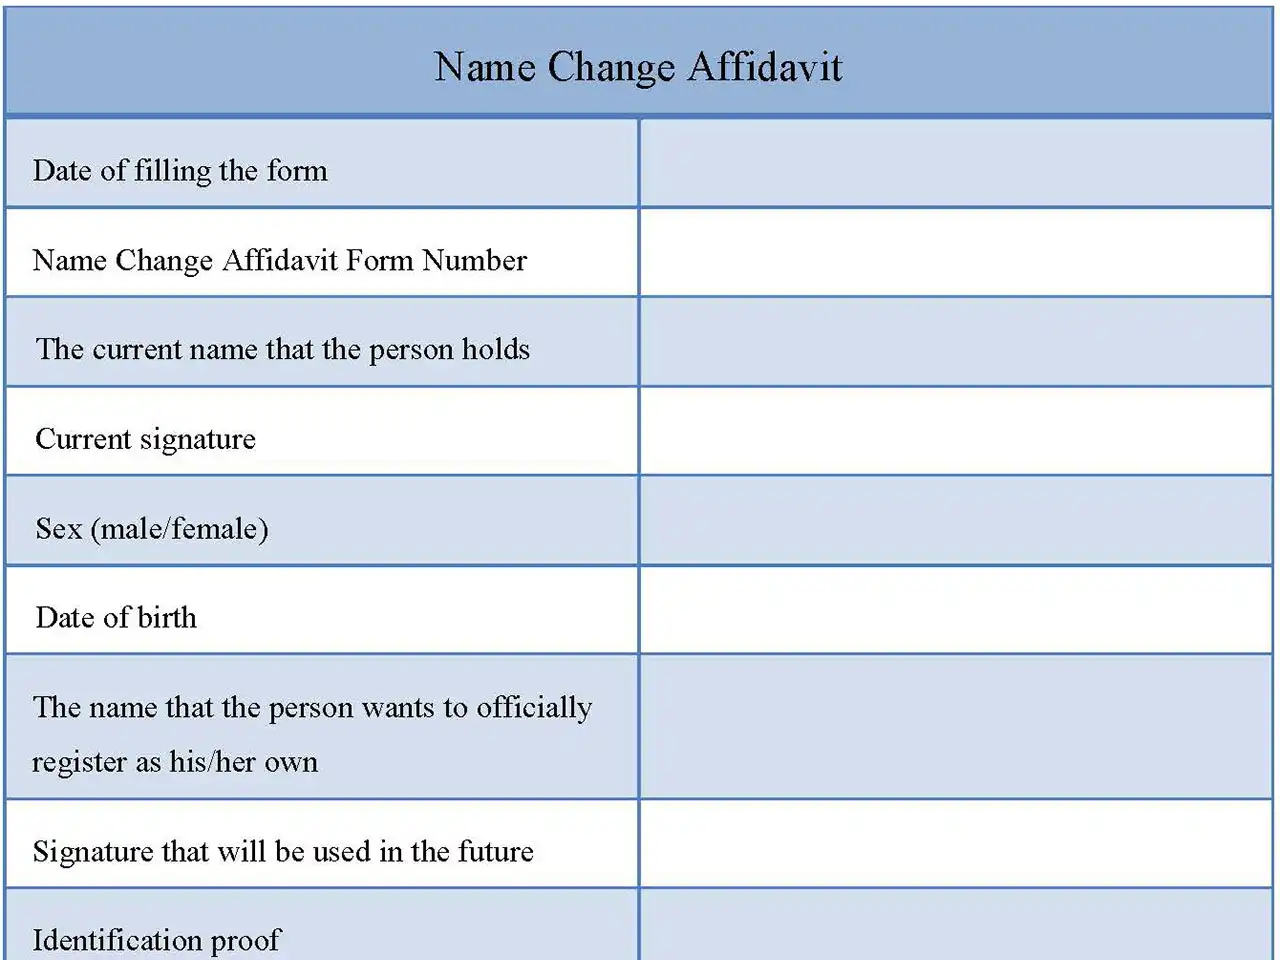 Name Change Affidavit Form